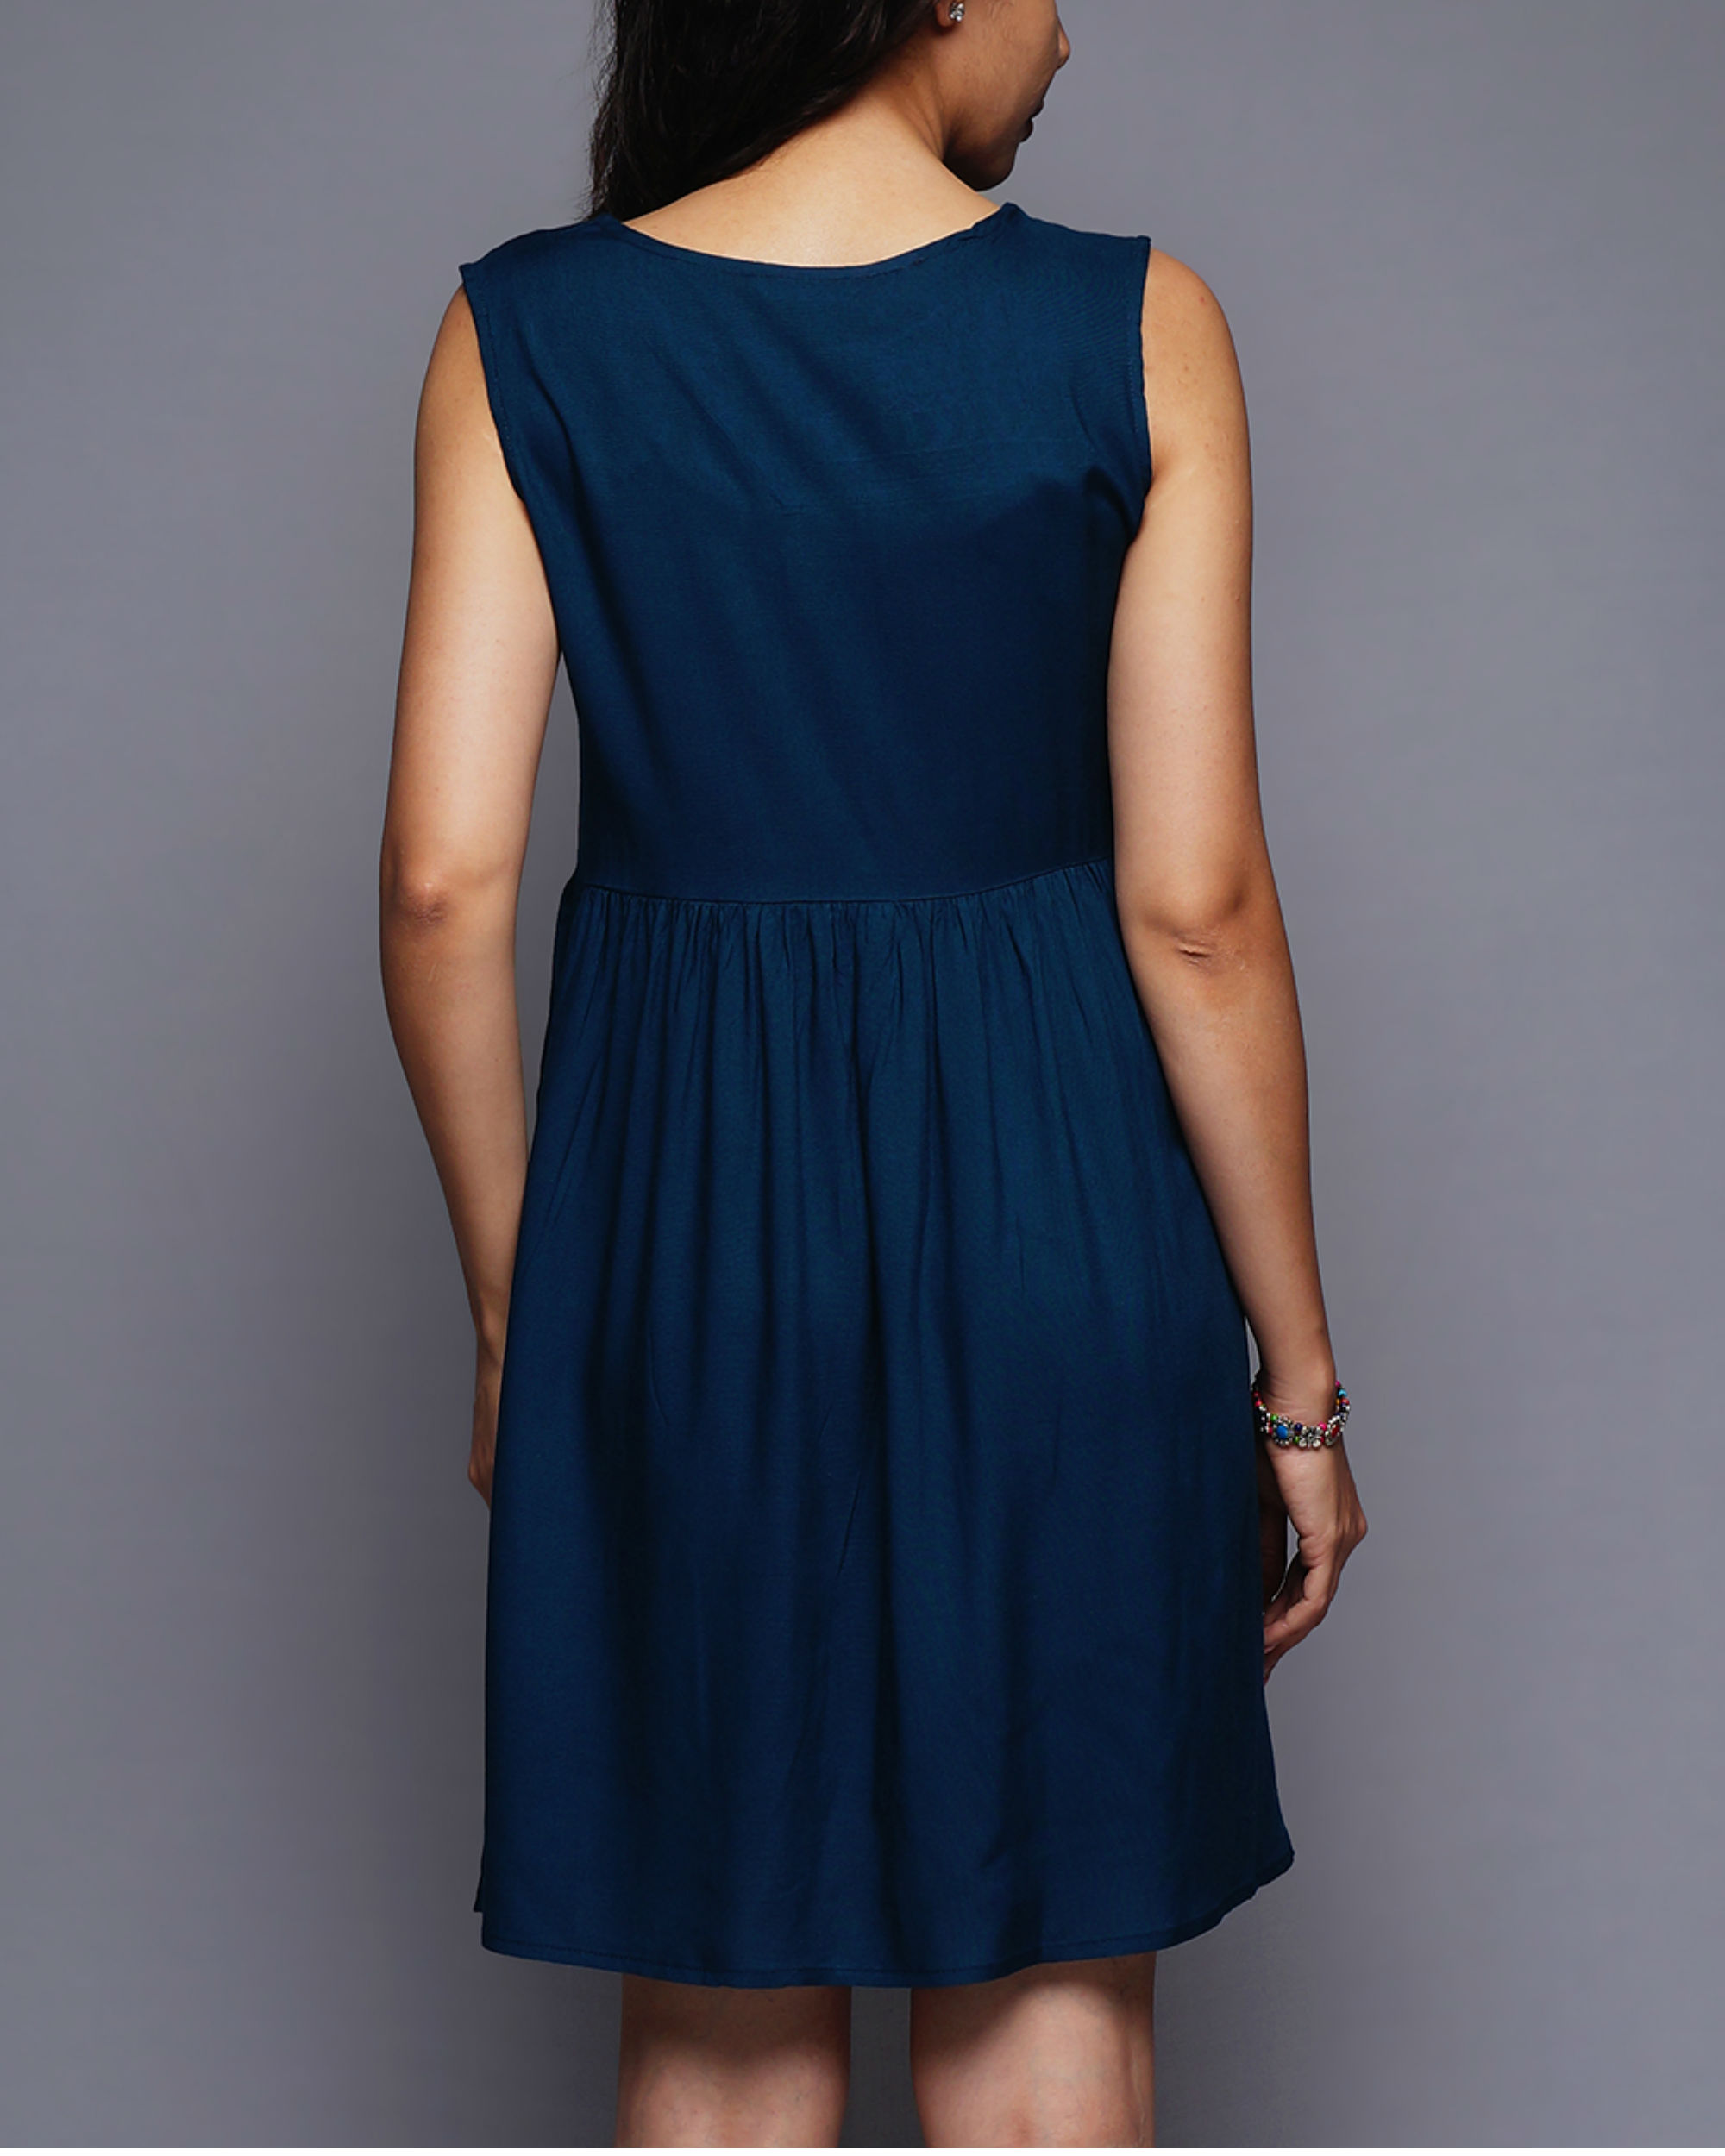 Tasseled short dress by UNTUNG | The Secret Label